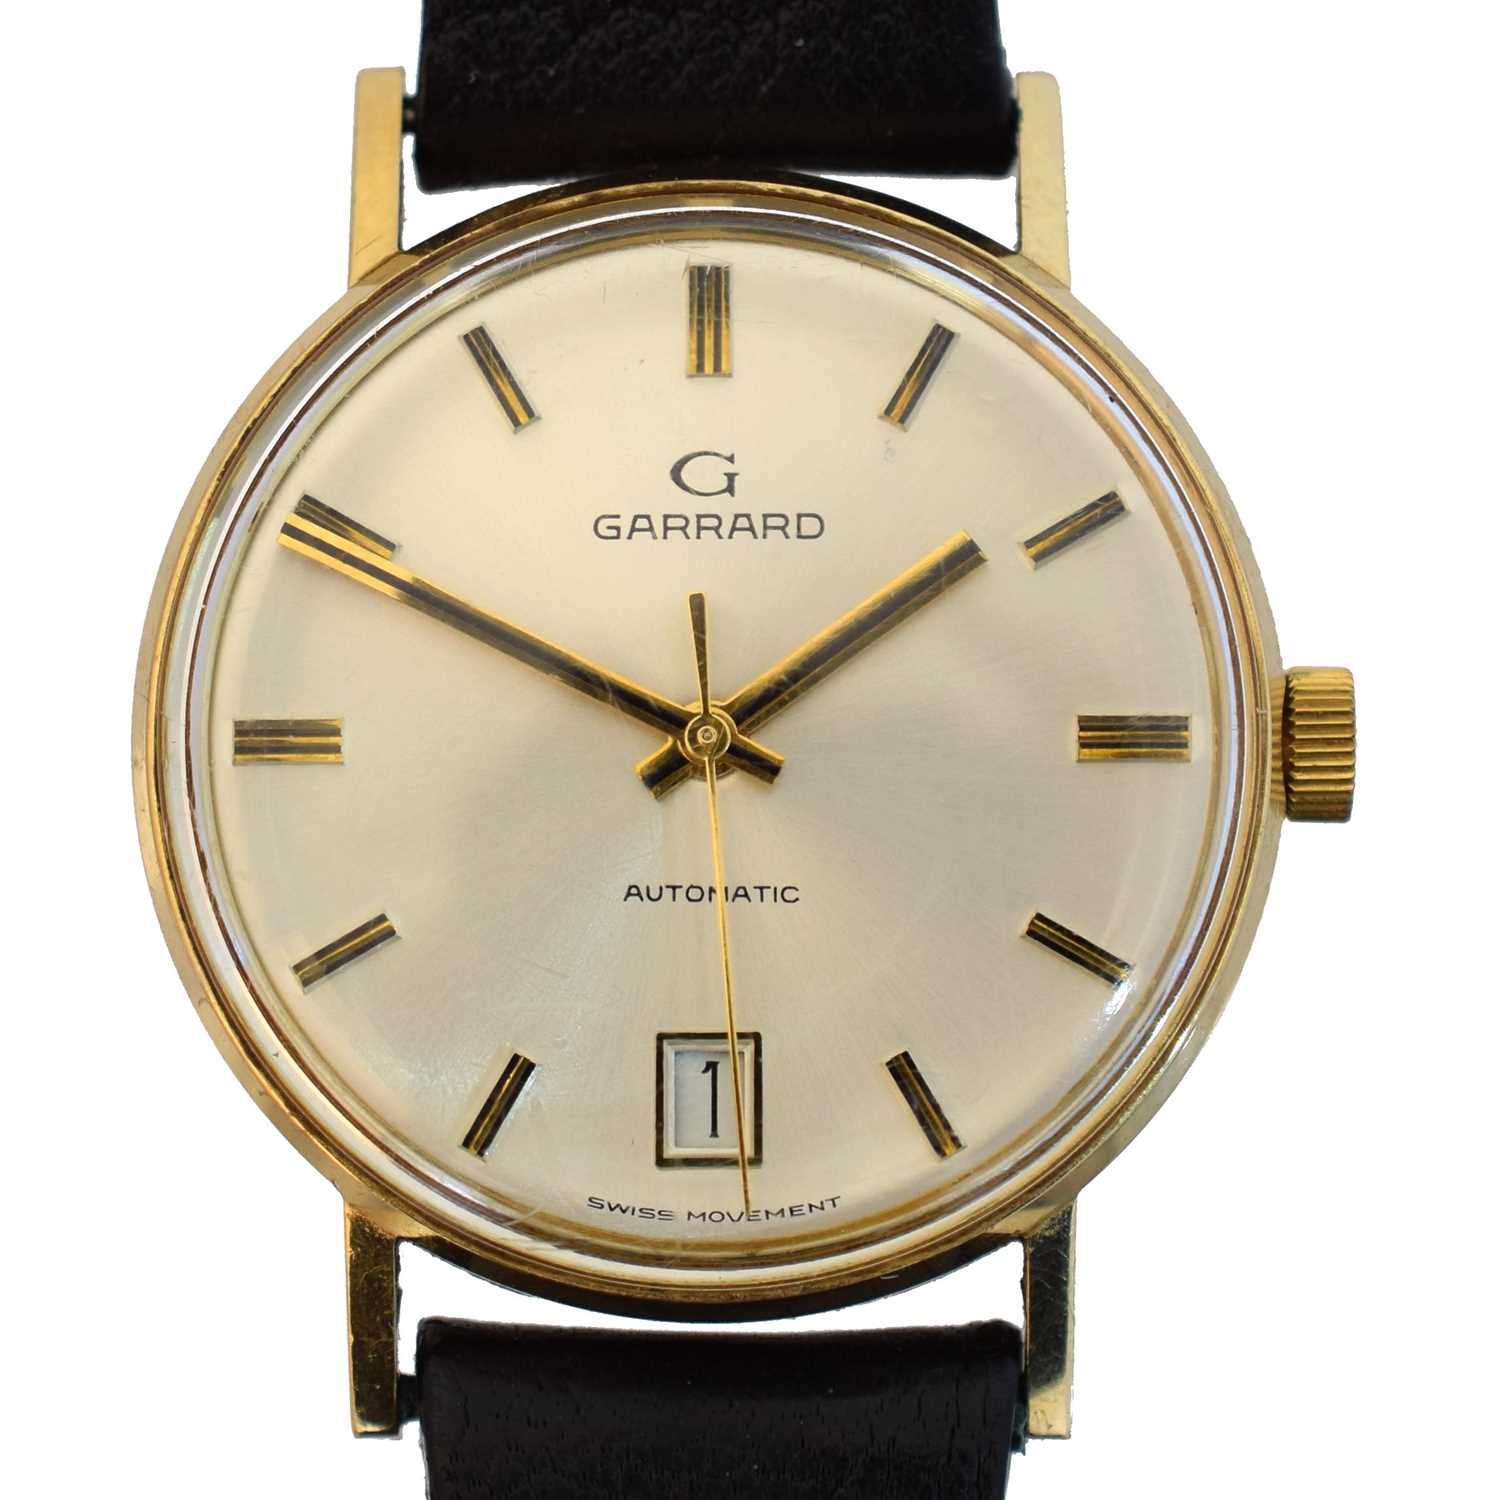 Lot A 9ct gold Garrard automatic wristwatch